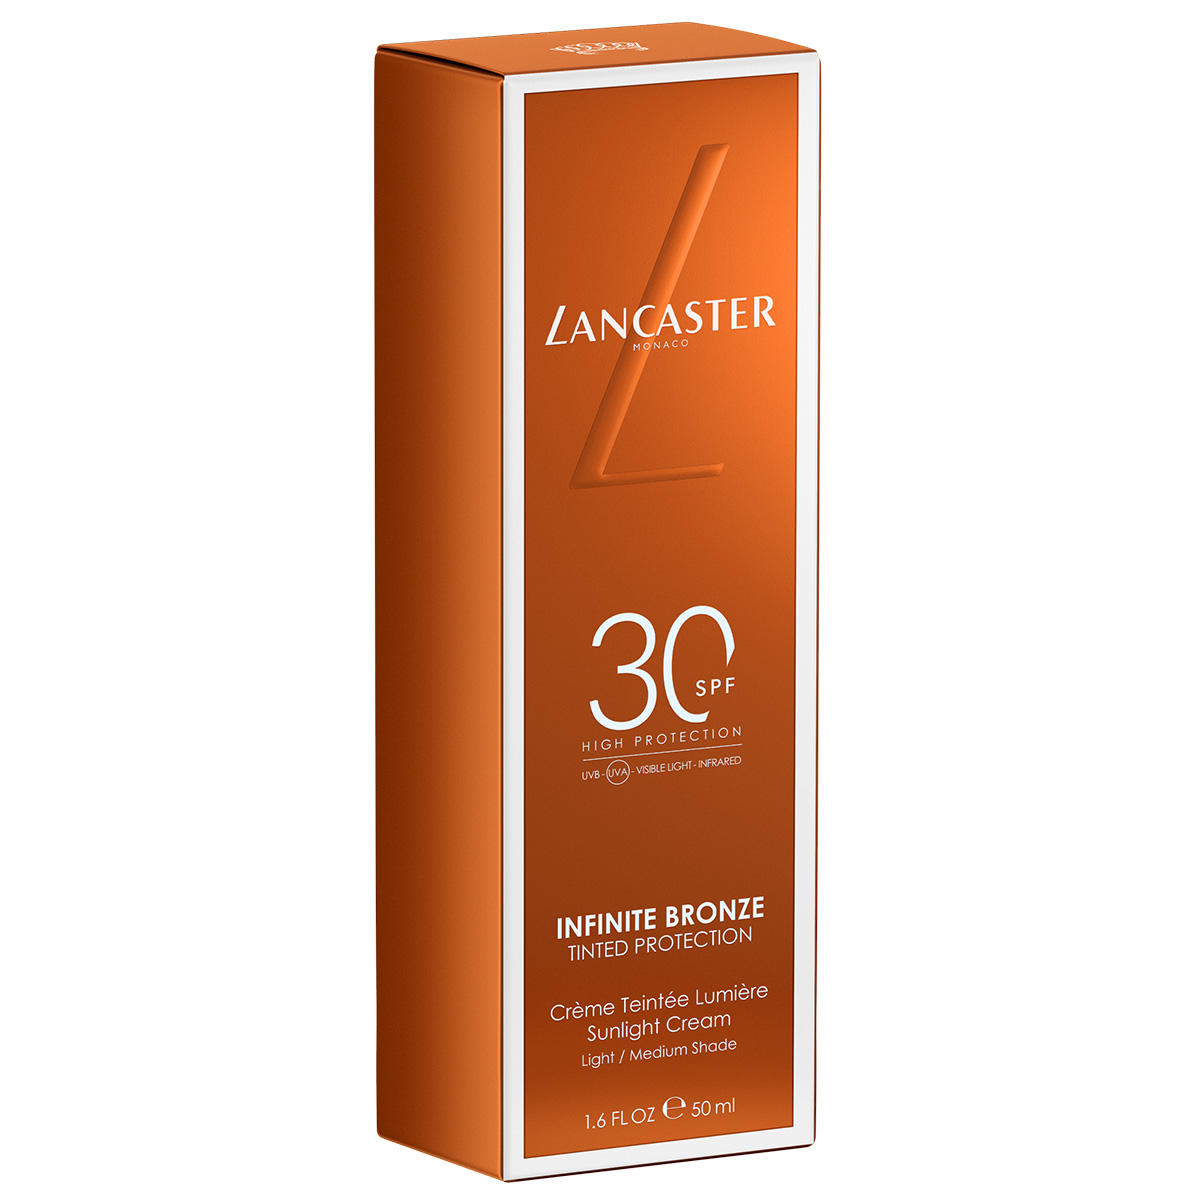 Lancaster Infinite Bronze Tinted Protection Sunlight Cream SPF 30 Light / Medium, 50 ml - 2